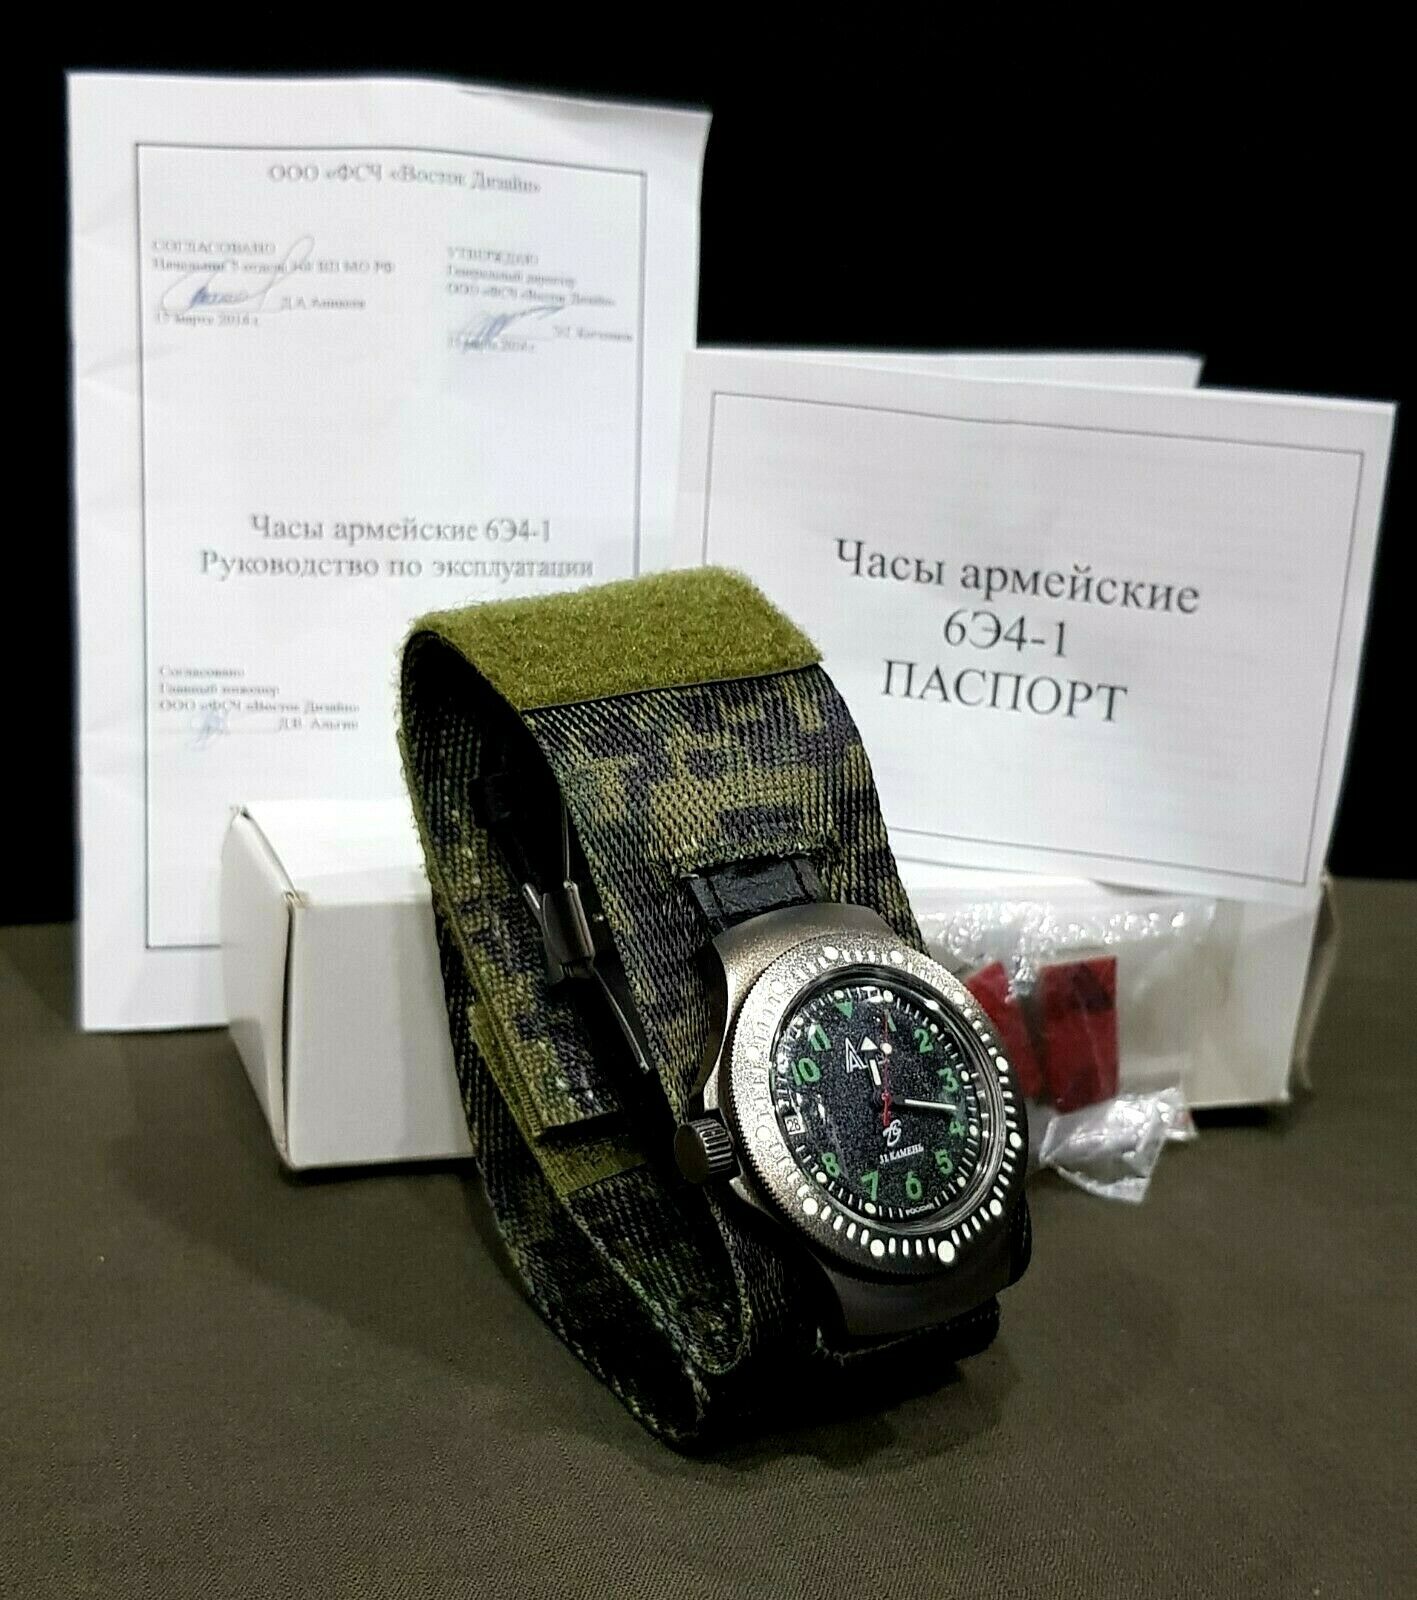 Original Russian Army Mechanical Wrist Watch 6e4-1. Ratnik Set.